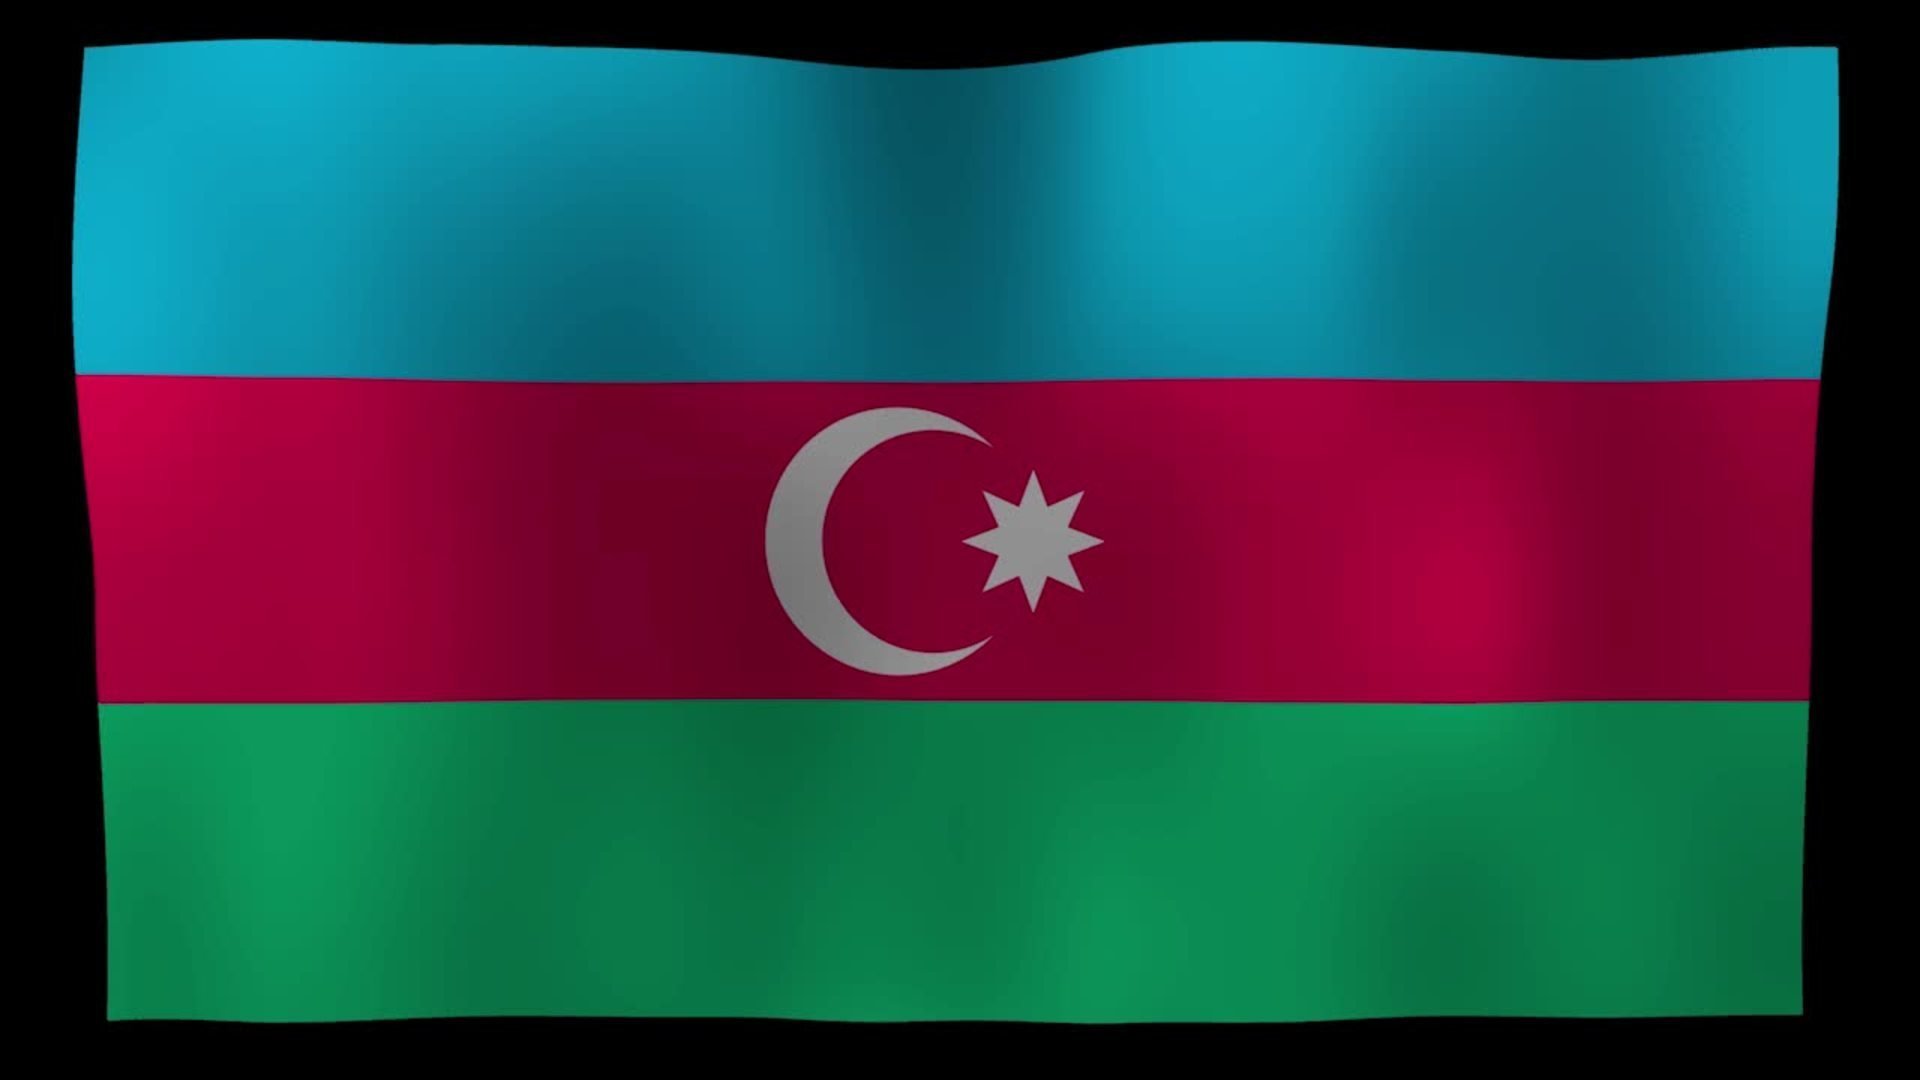 Айфон азербайджан. Флаг Азербайджана. Обои Азербайджан. Обои для азербайджанцев. Азербайджан фон для презентации.